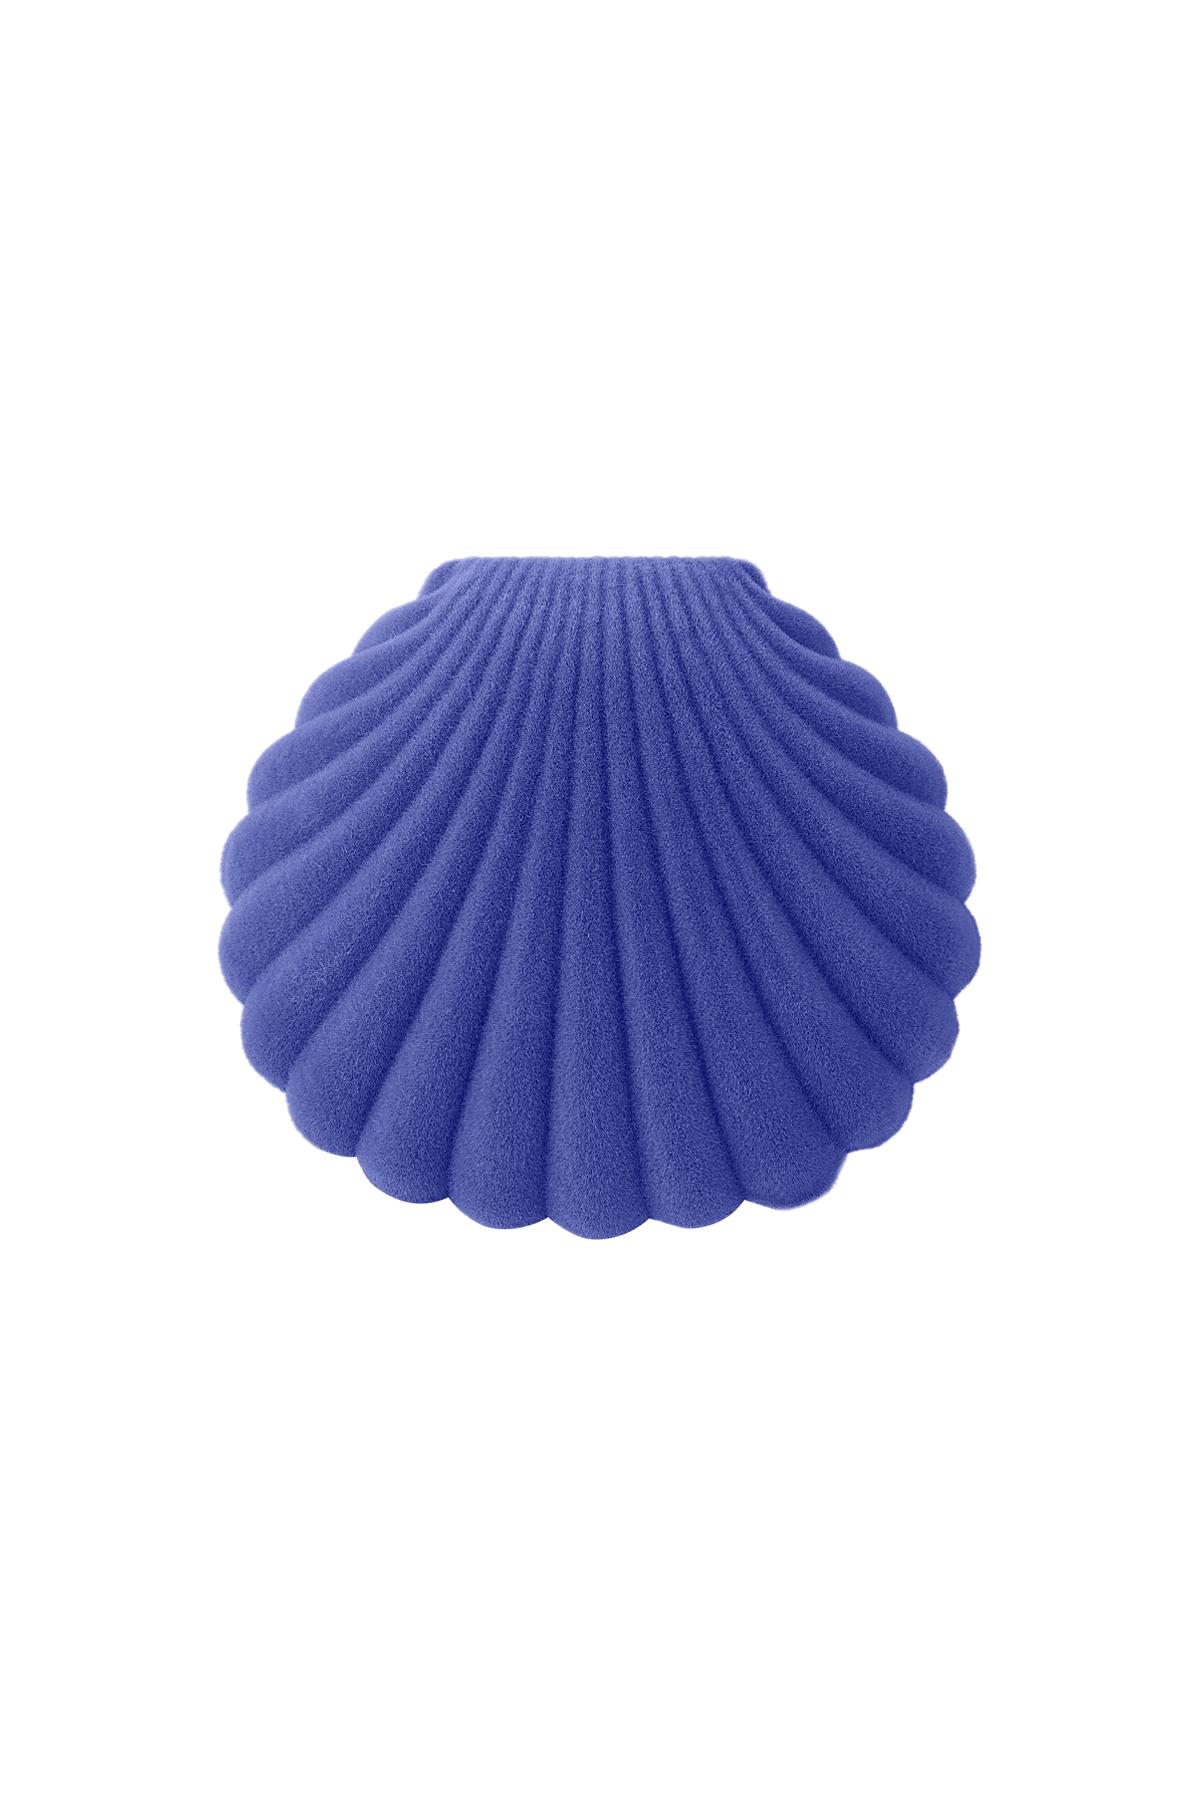 Portagioie Shell Blu